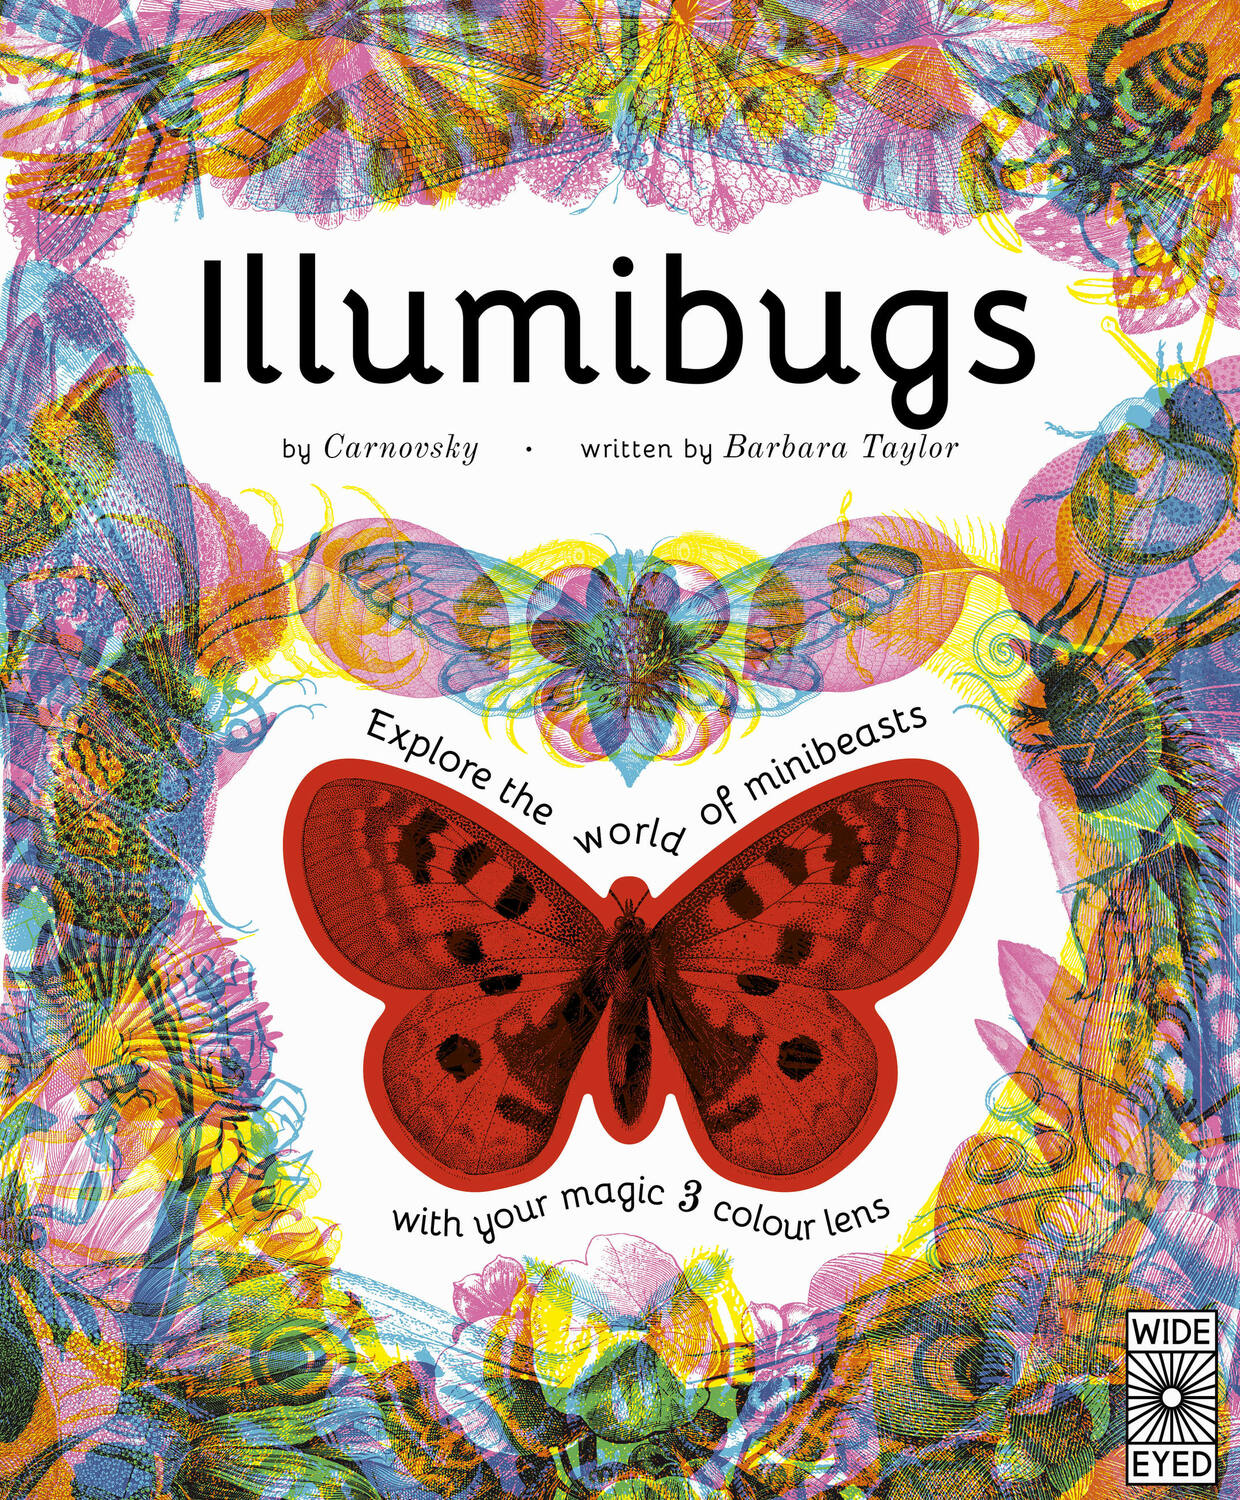 Illumibugs: Explore the world of mini beasts with your magic 3 color lens